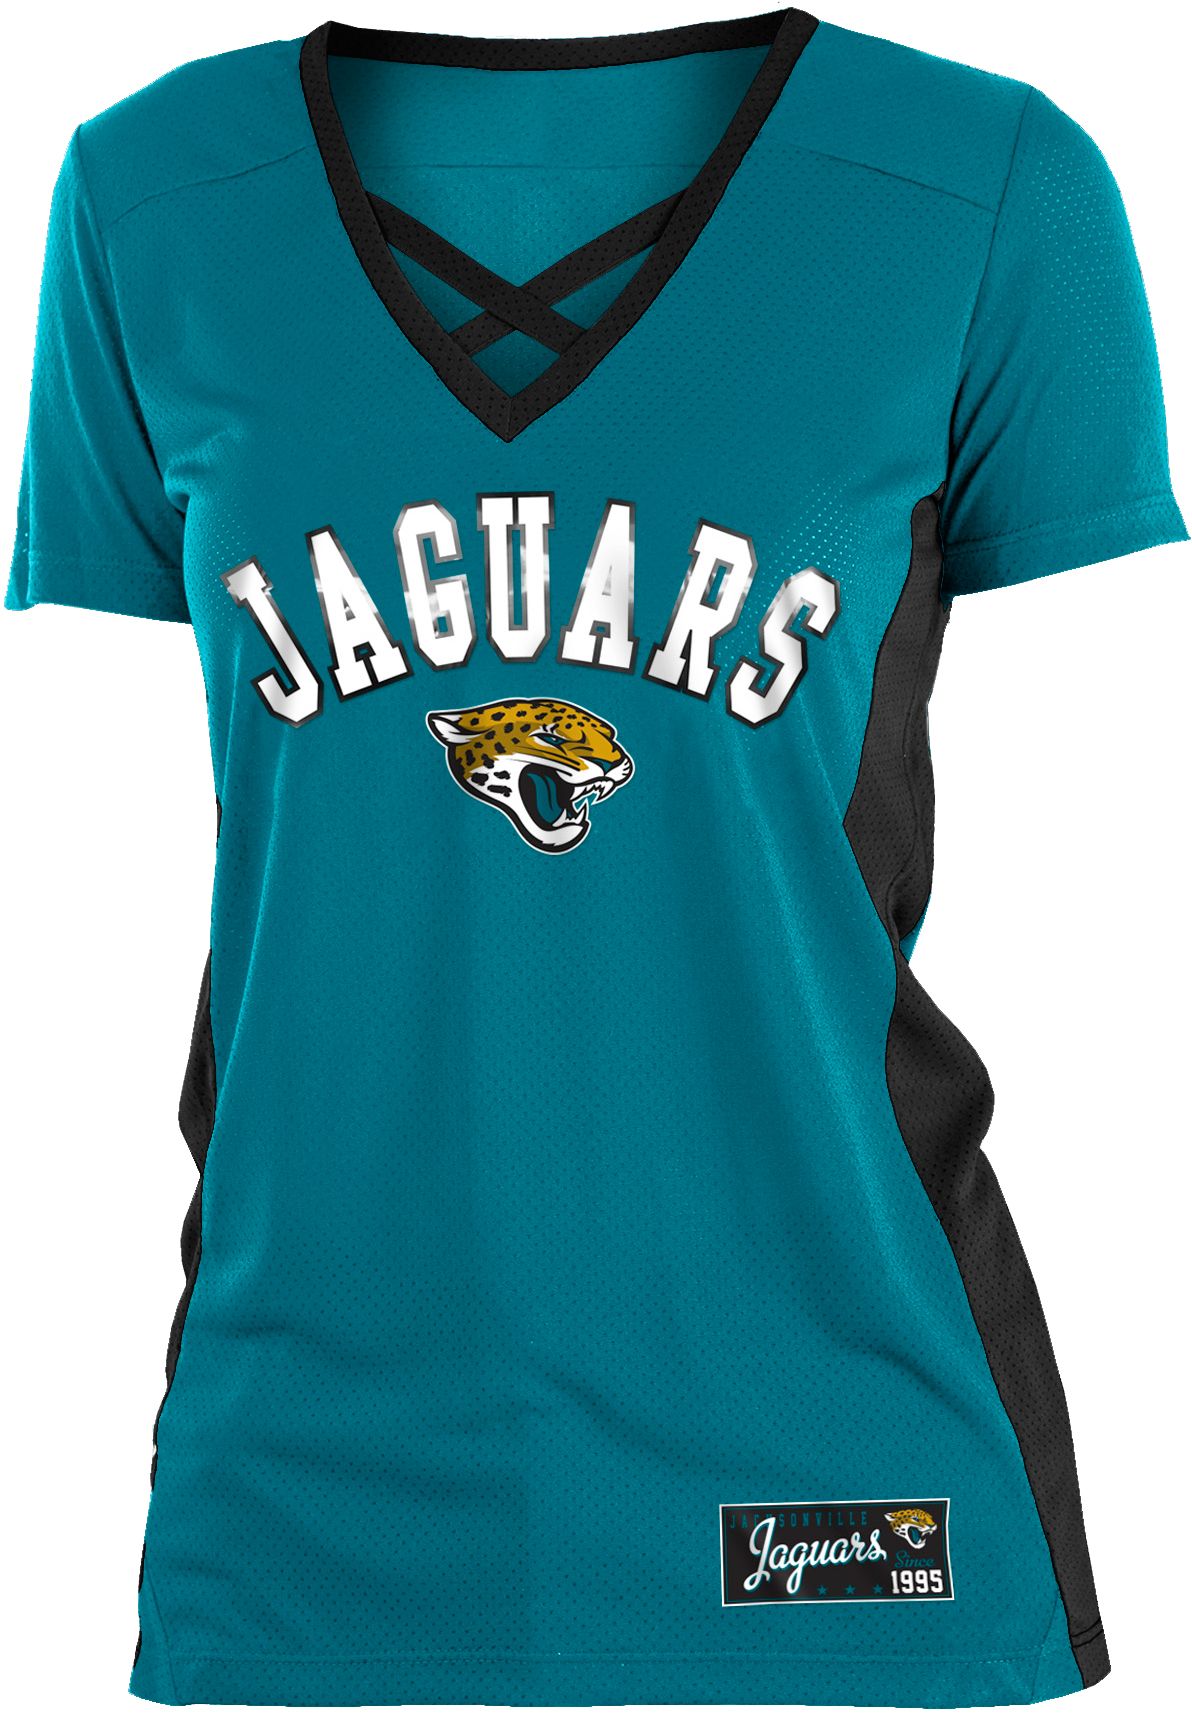 jacksonville jaguars women's jersey